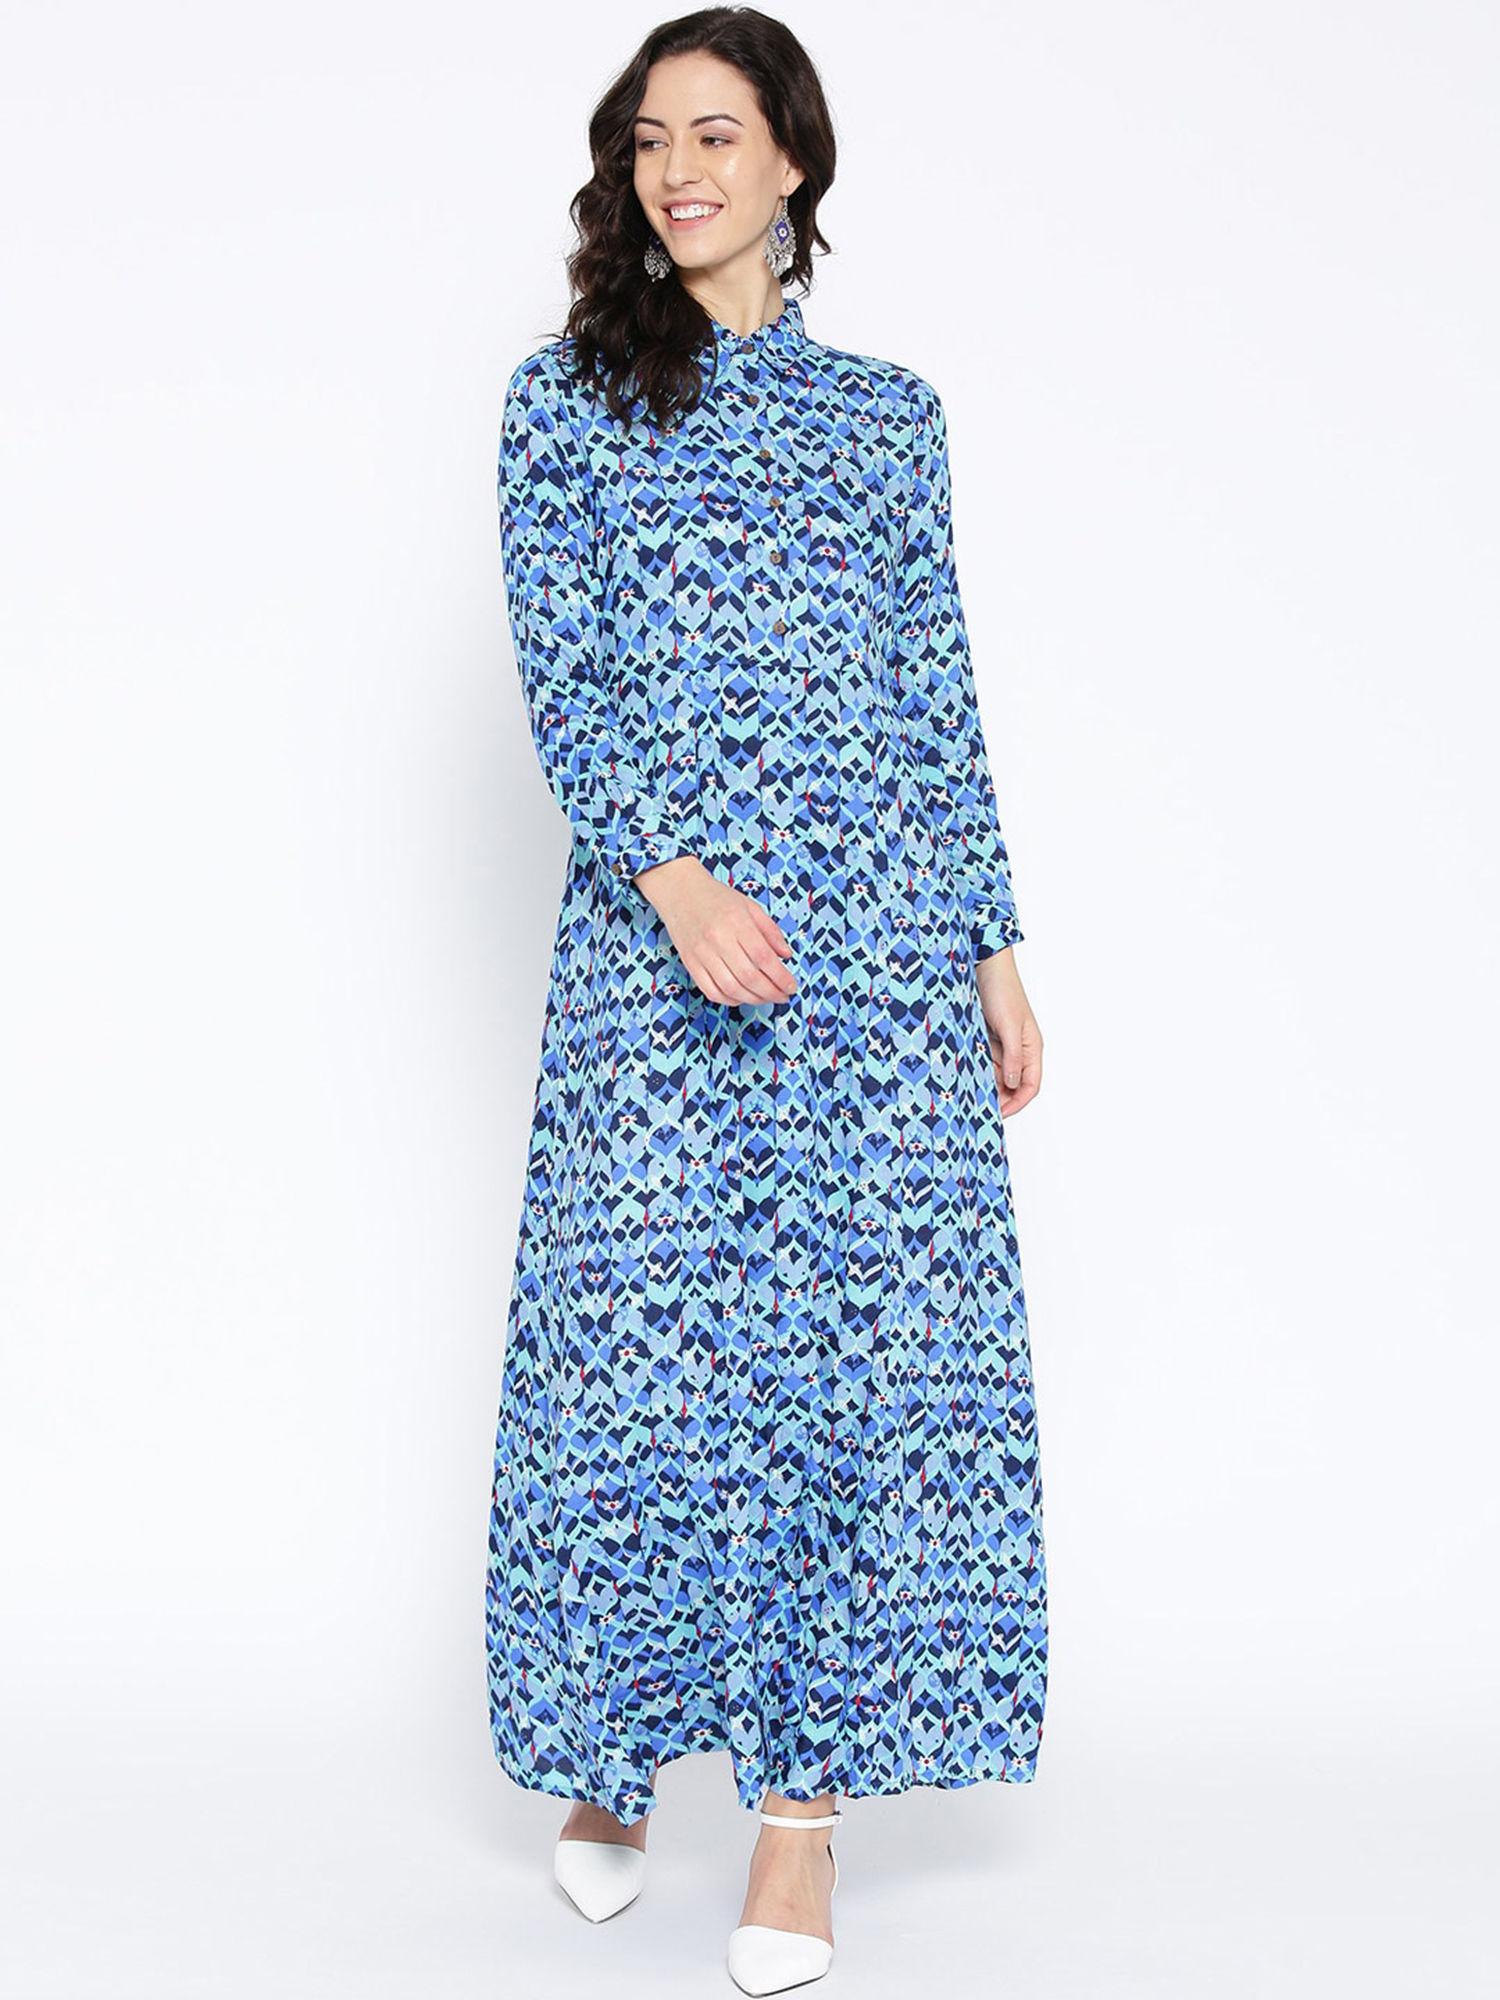 blue geometric dress